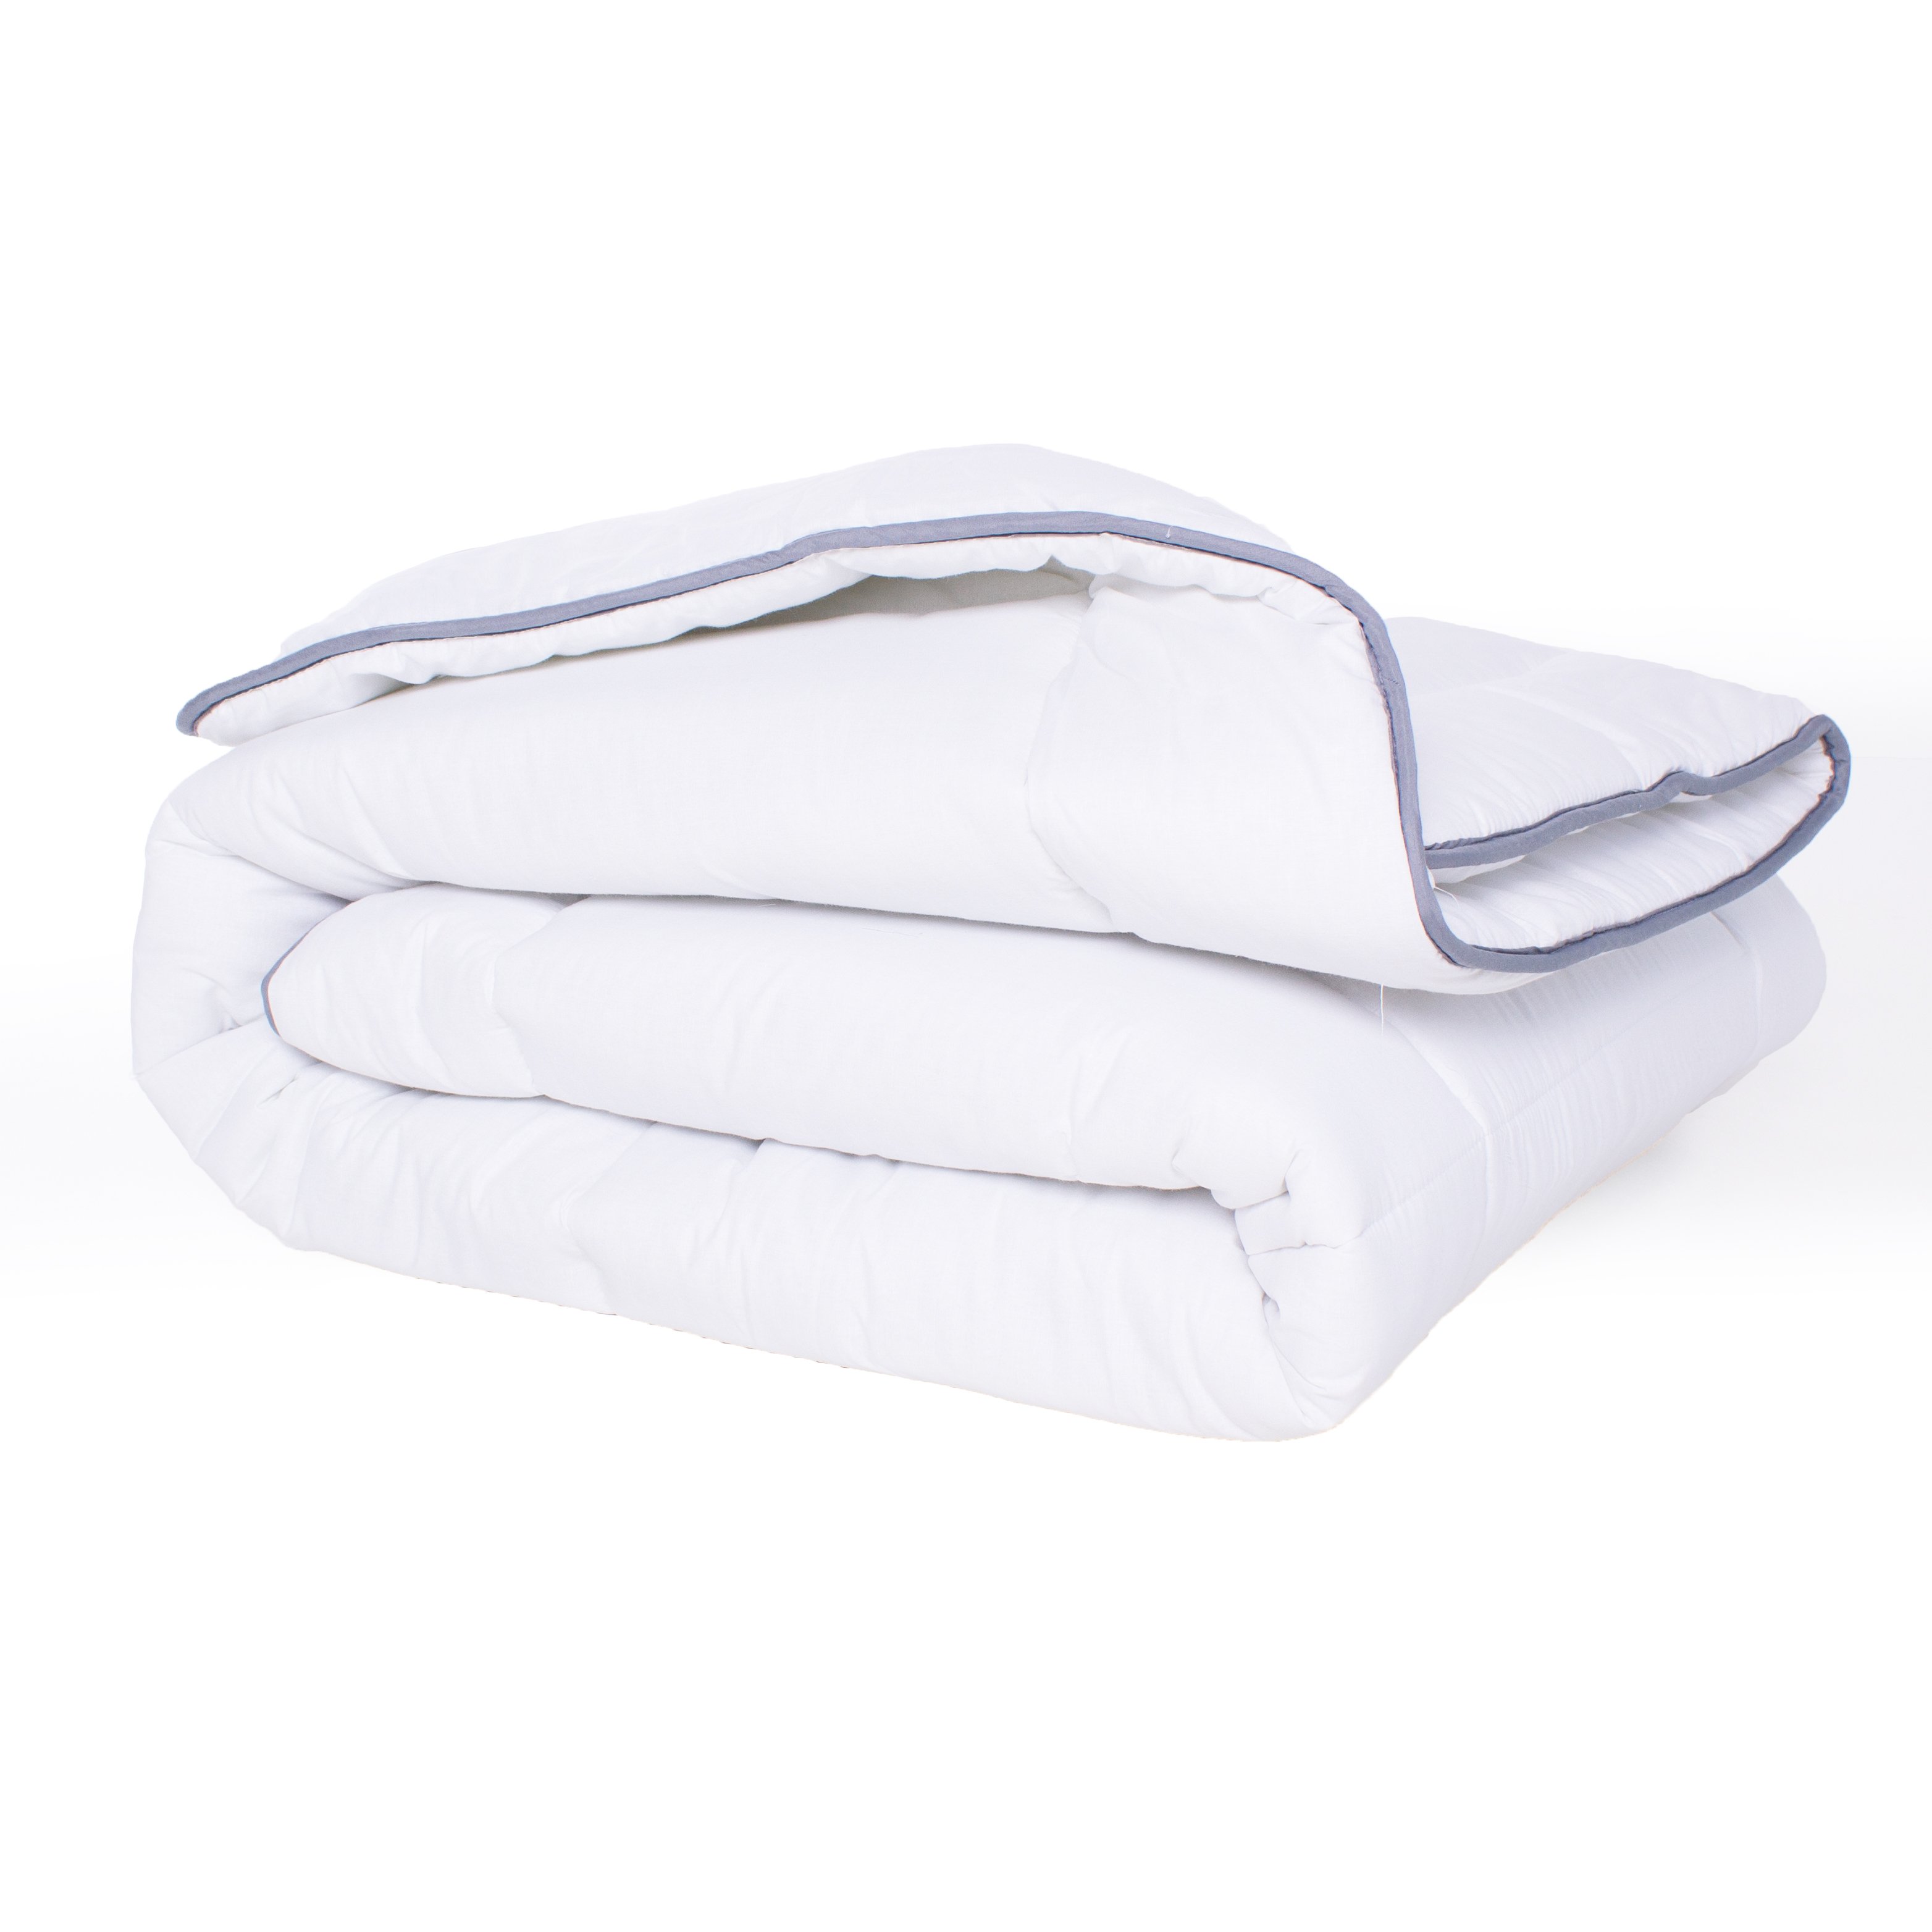 Одеяло шерстяное MirSon Royal №026, демисезонное, 155x215 см, белое - фото 2